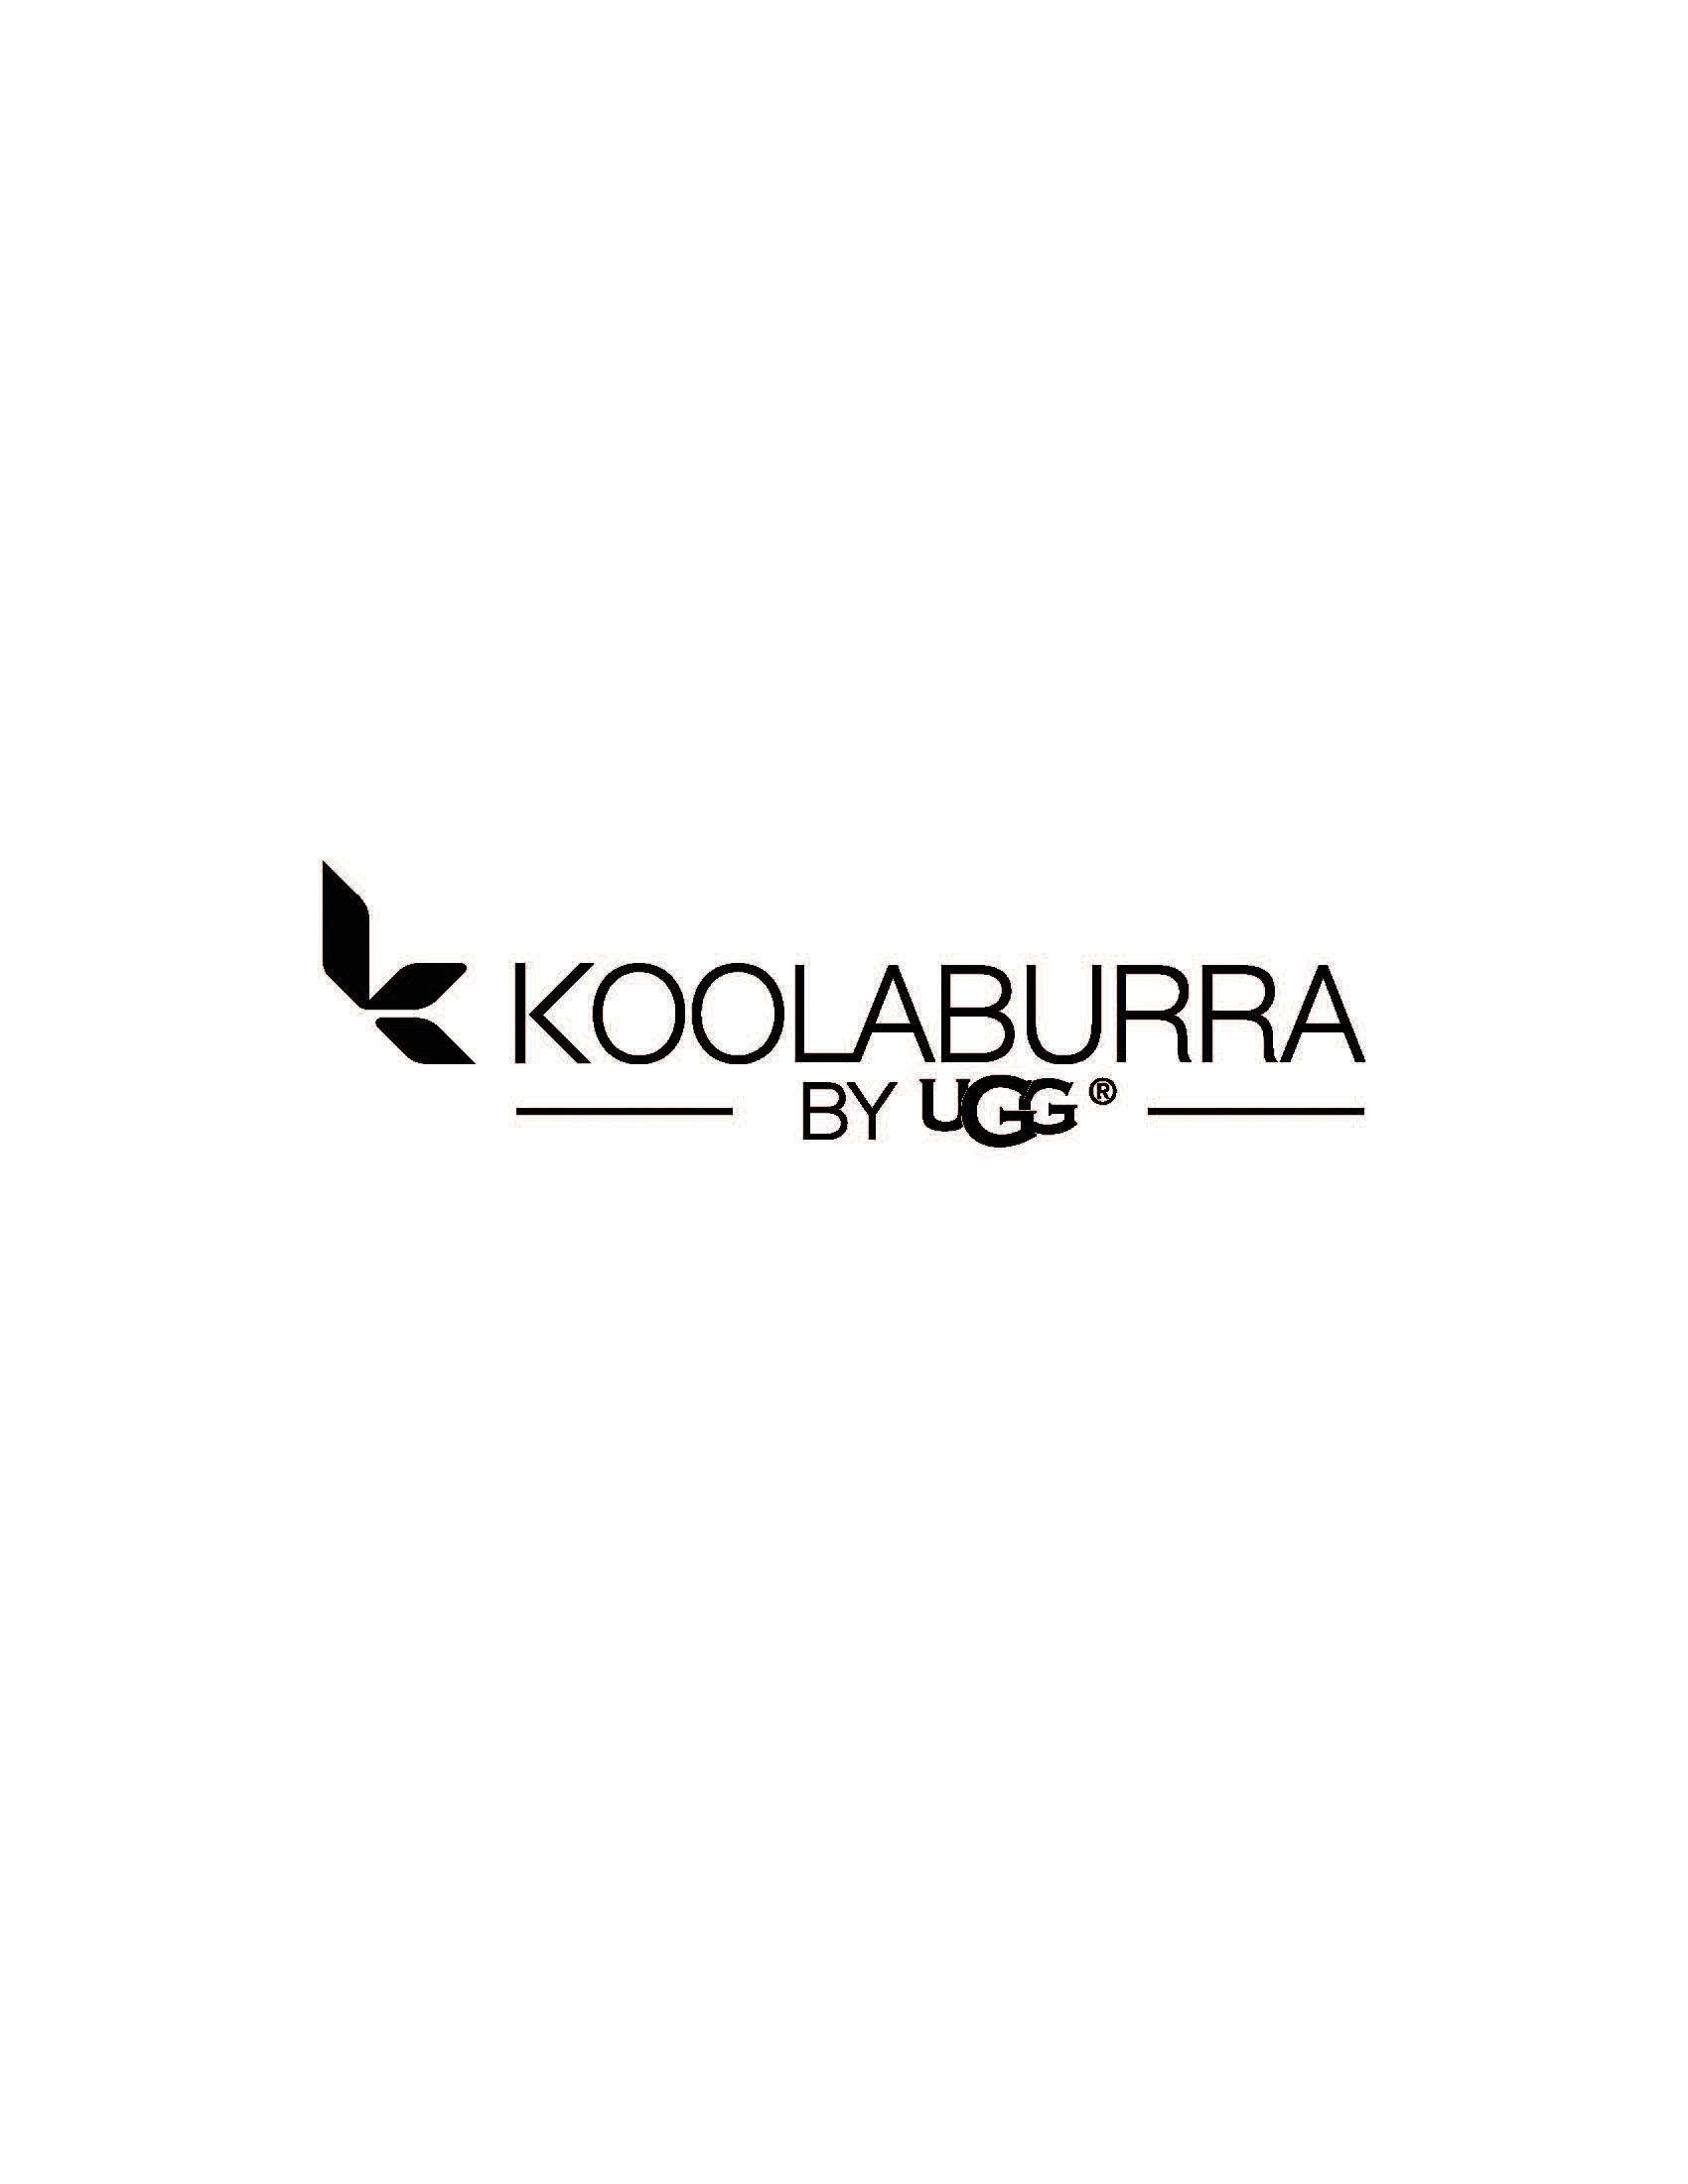 koolaburra by ugg logo